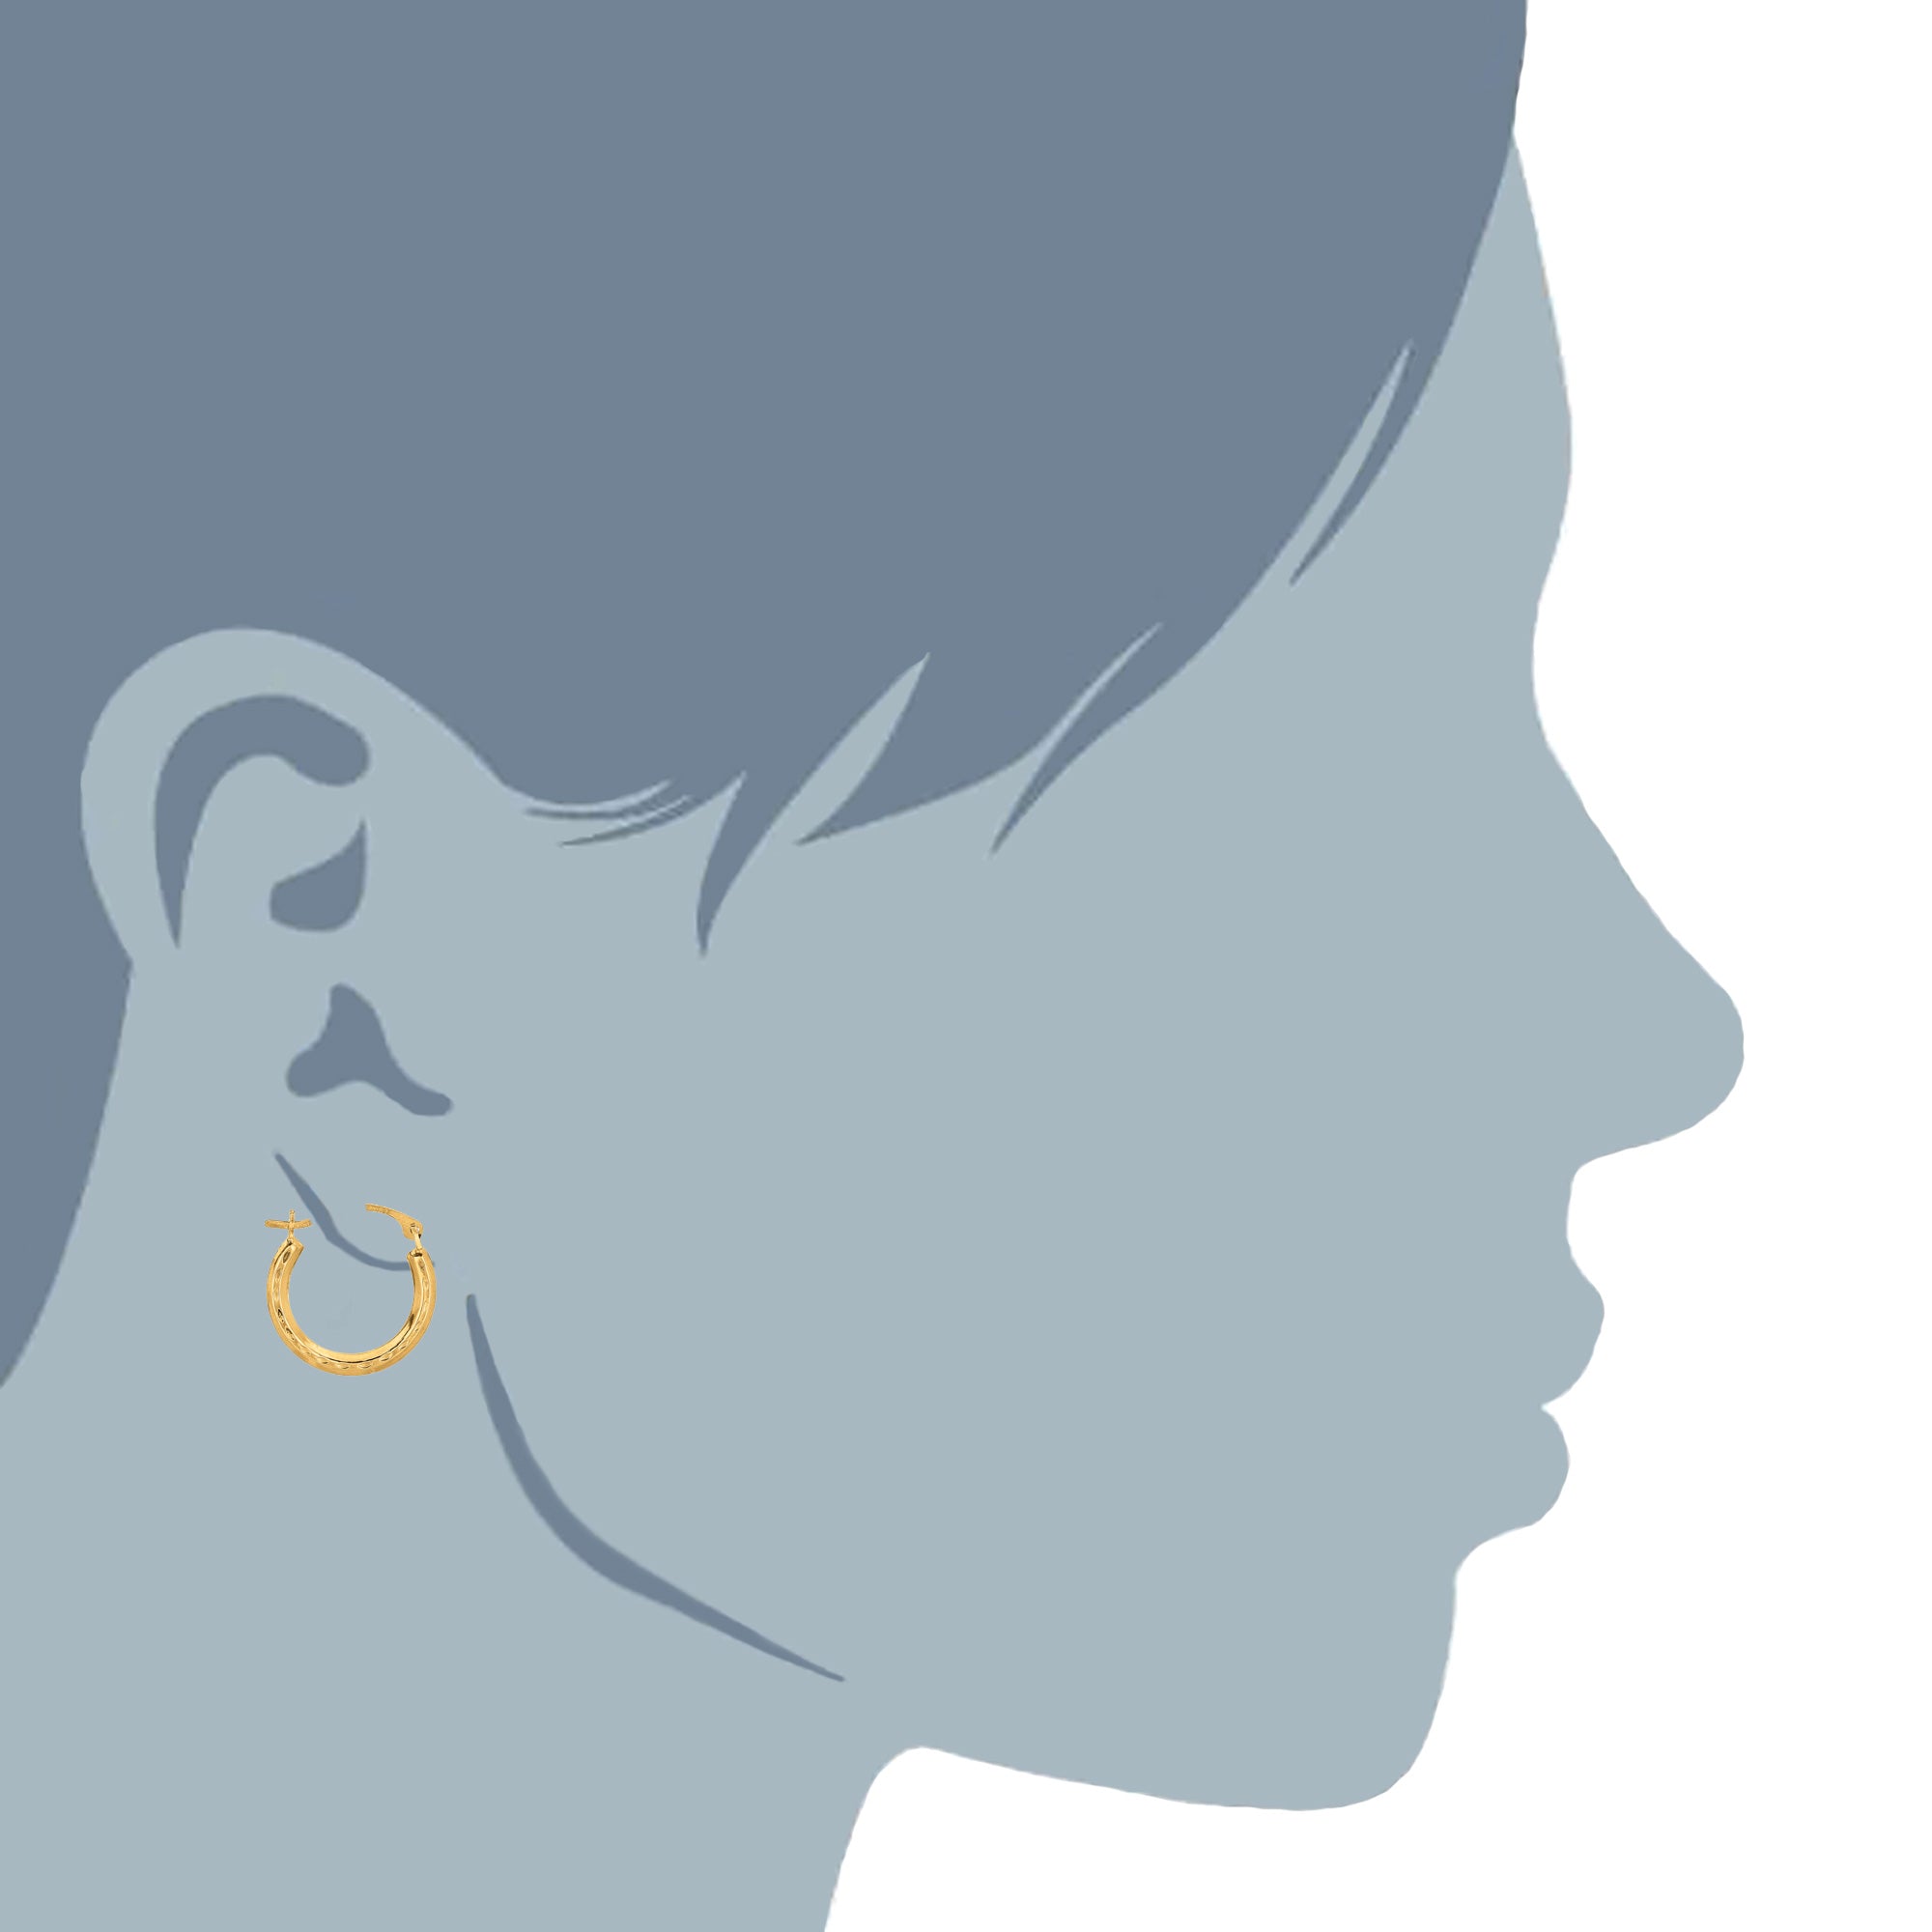 10k Yellow Gold Shiny Diamond Cut Round Hoop Earrings, Diameter 15mm fine designer jewelry for men and women